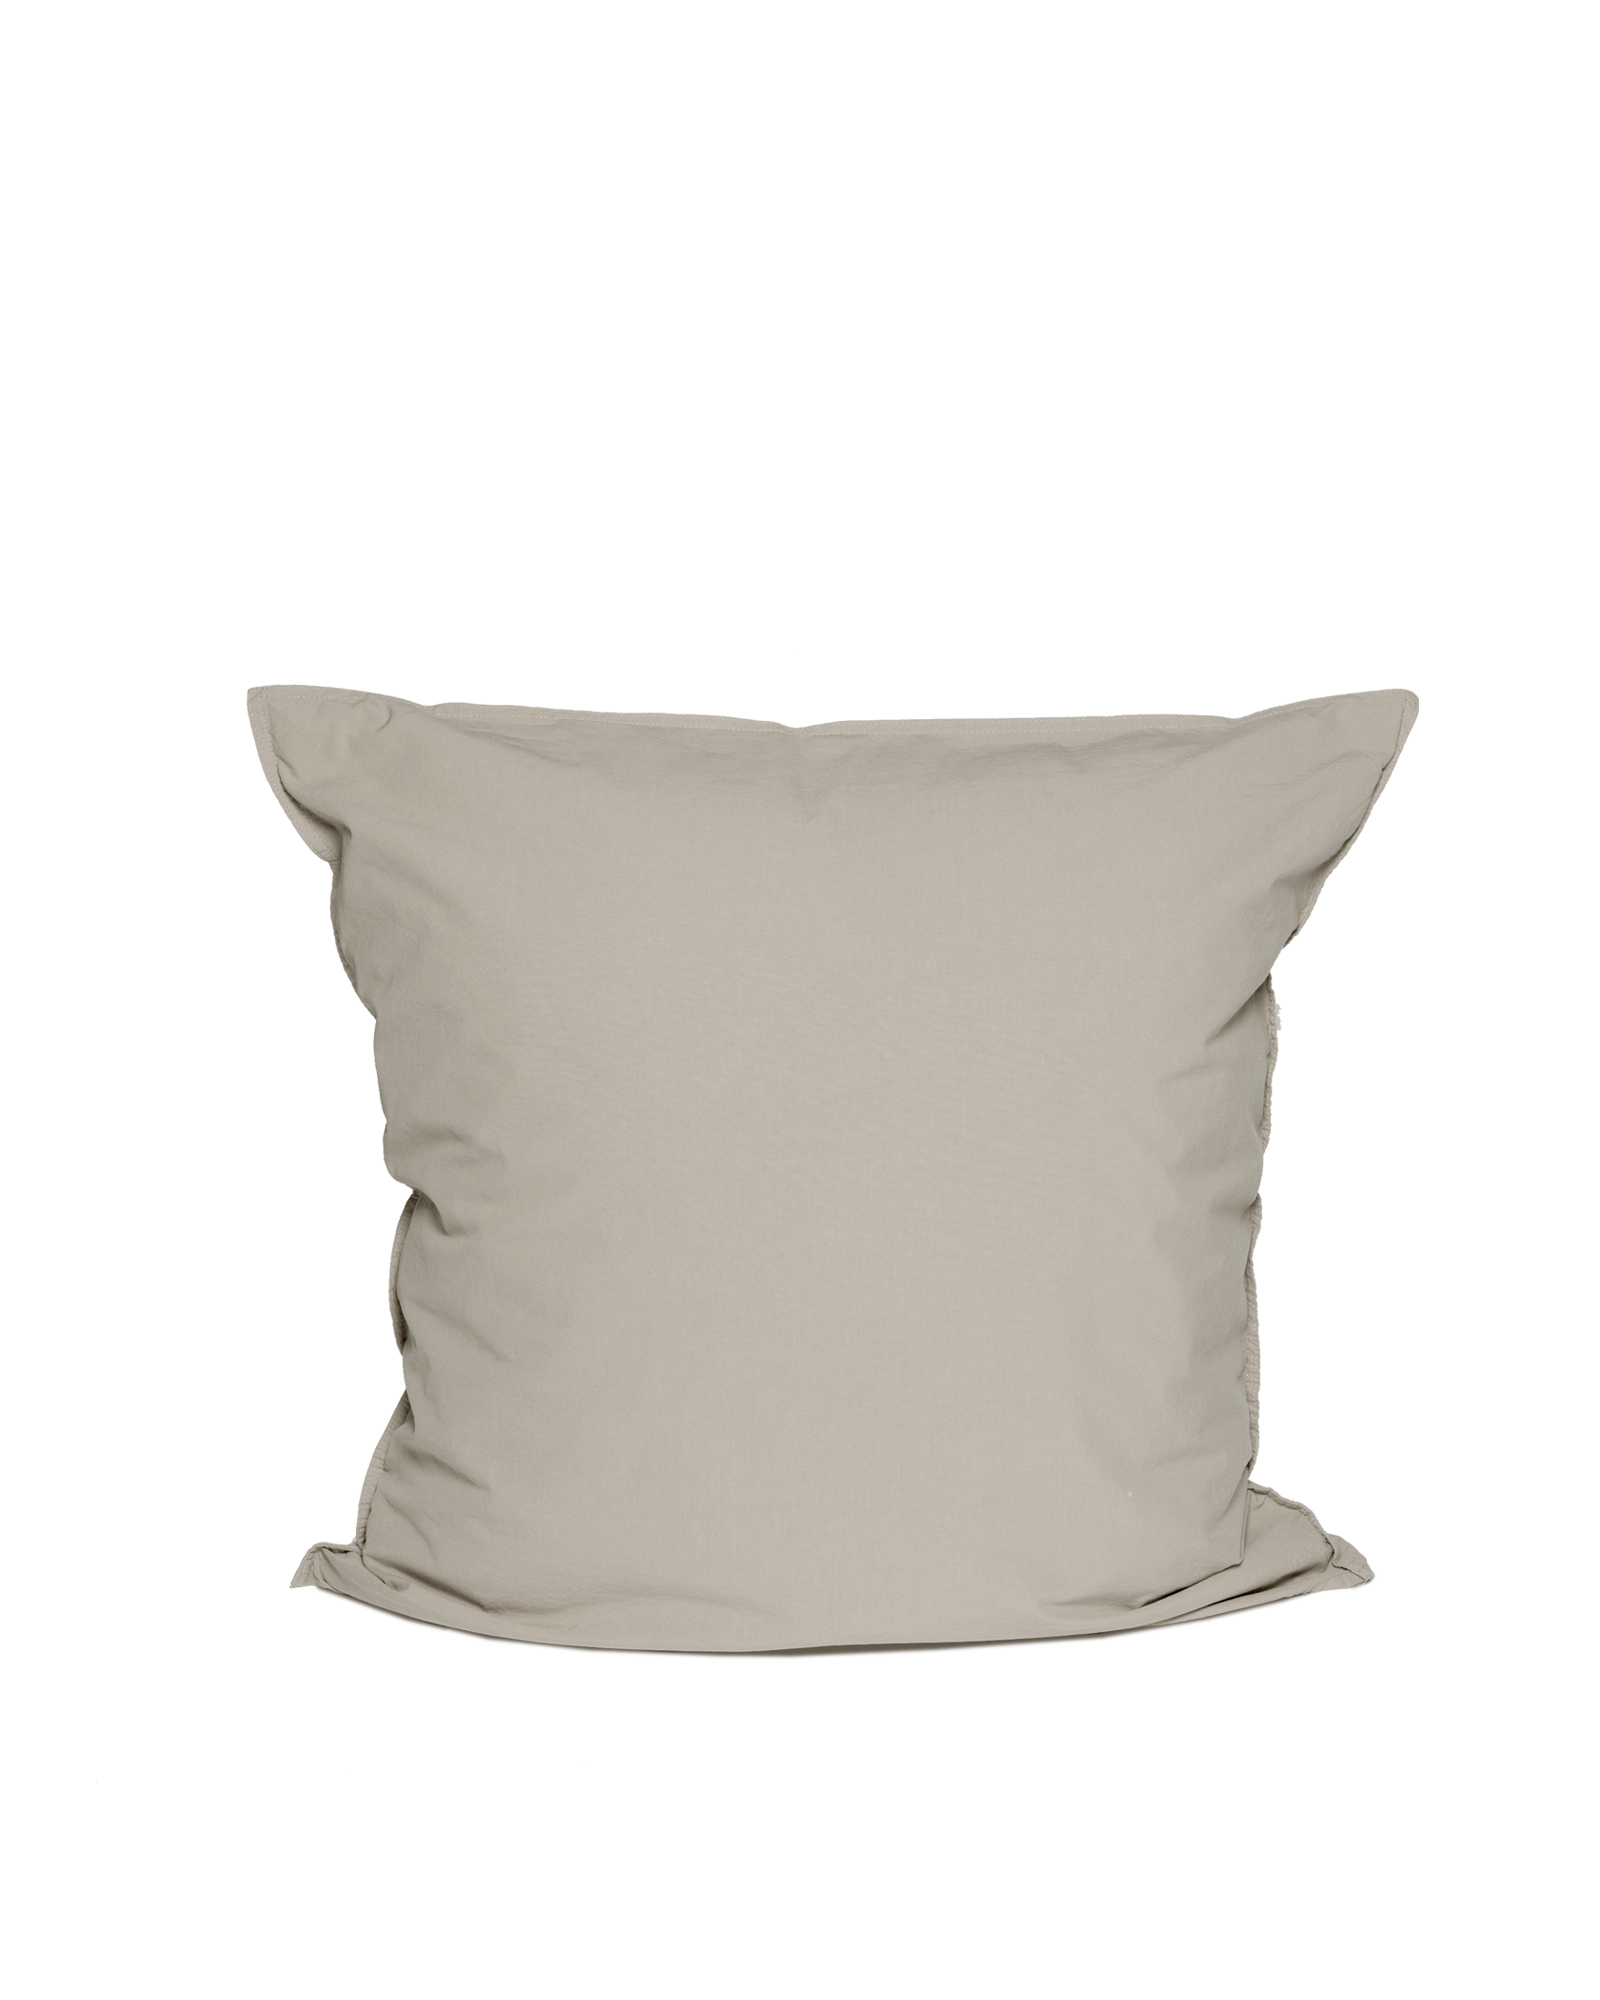 MARIE-MARIE - Pillowcase VINTAGE COTTON Granola - 65x65 cm - Granola